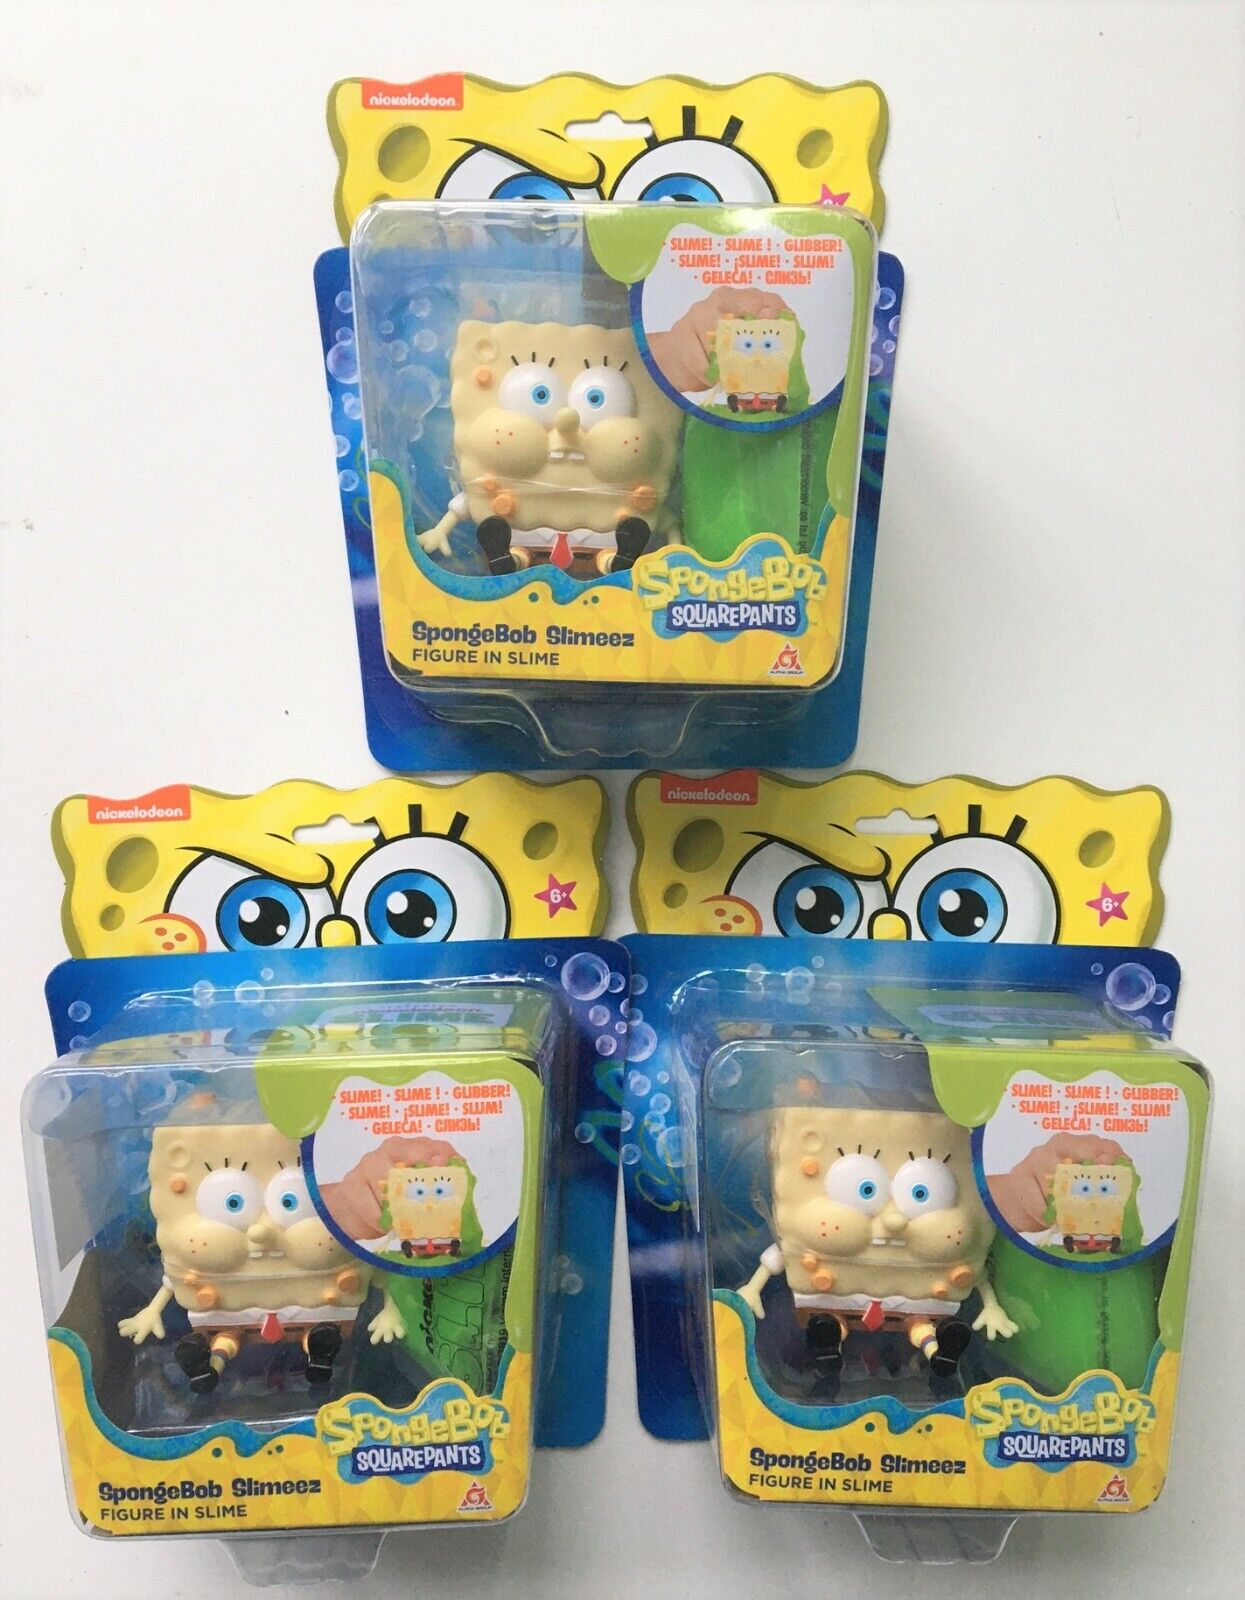 3 Spongebob Slimeez Squarepants Figures with Slime - NEW